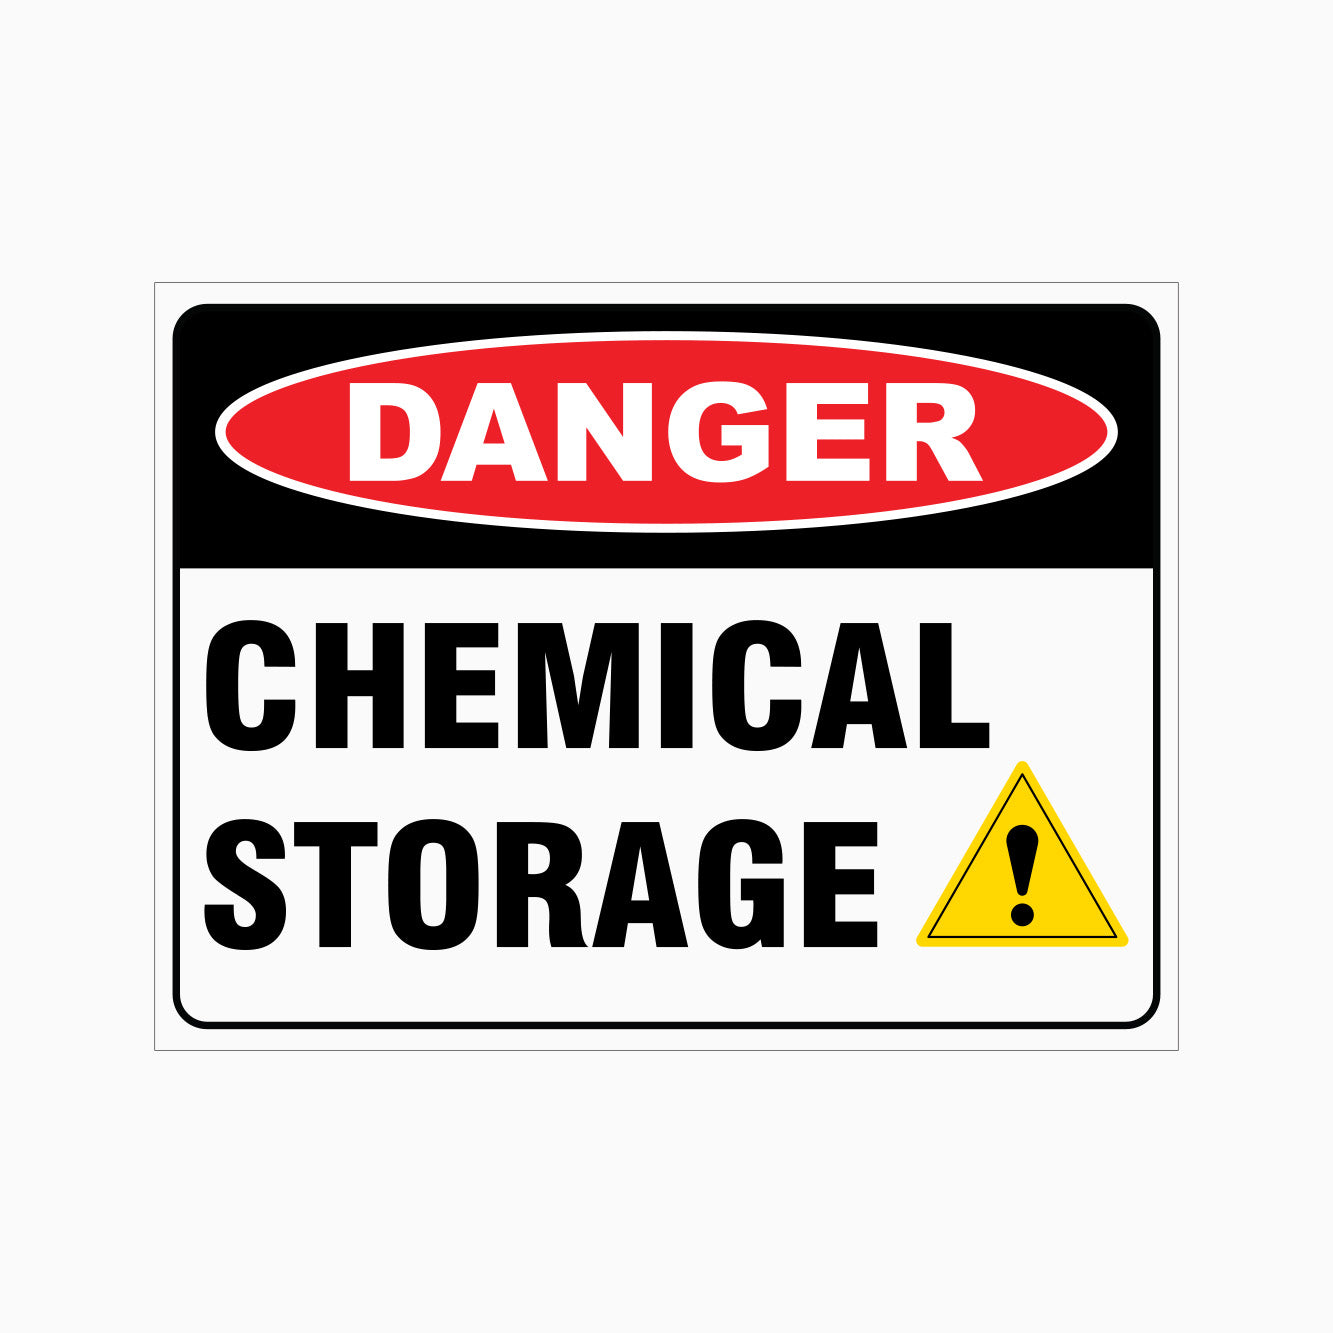 DANGER CHEMICAL STORAGE SIGN